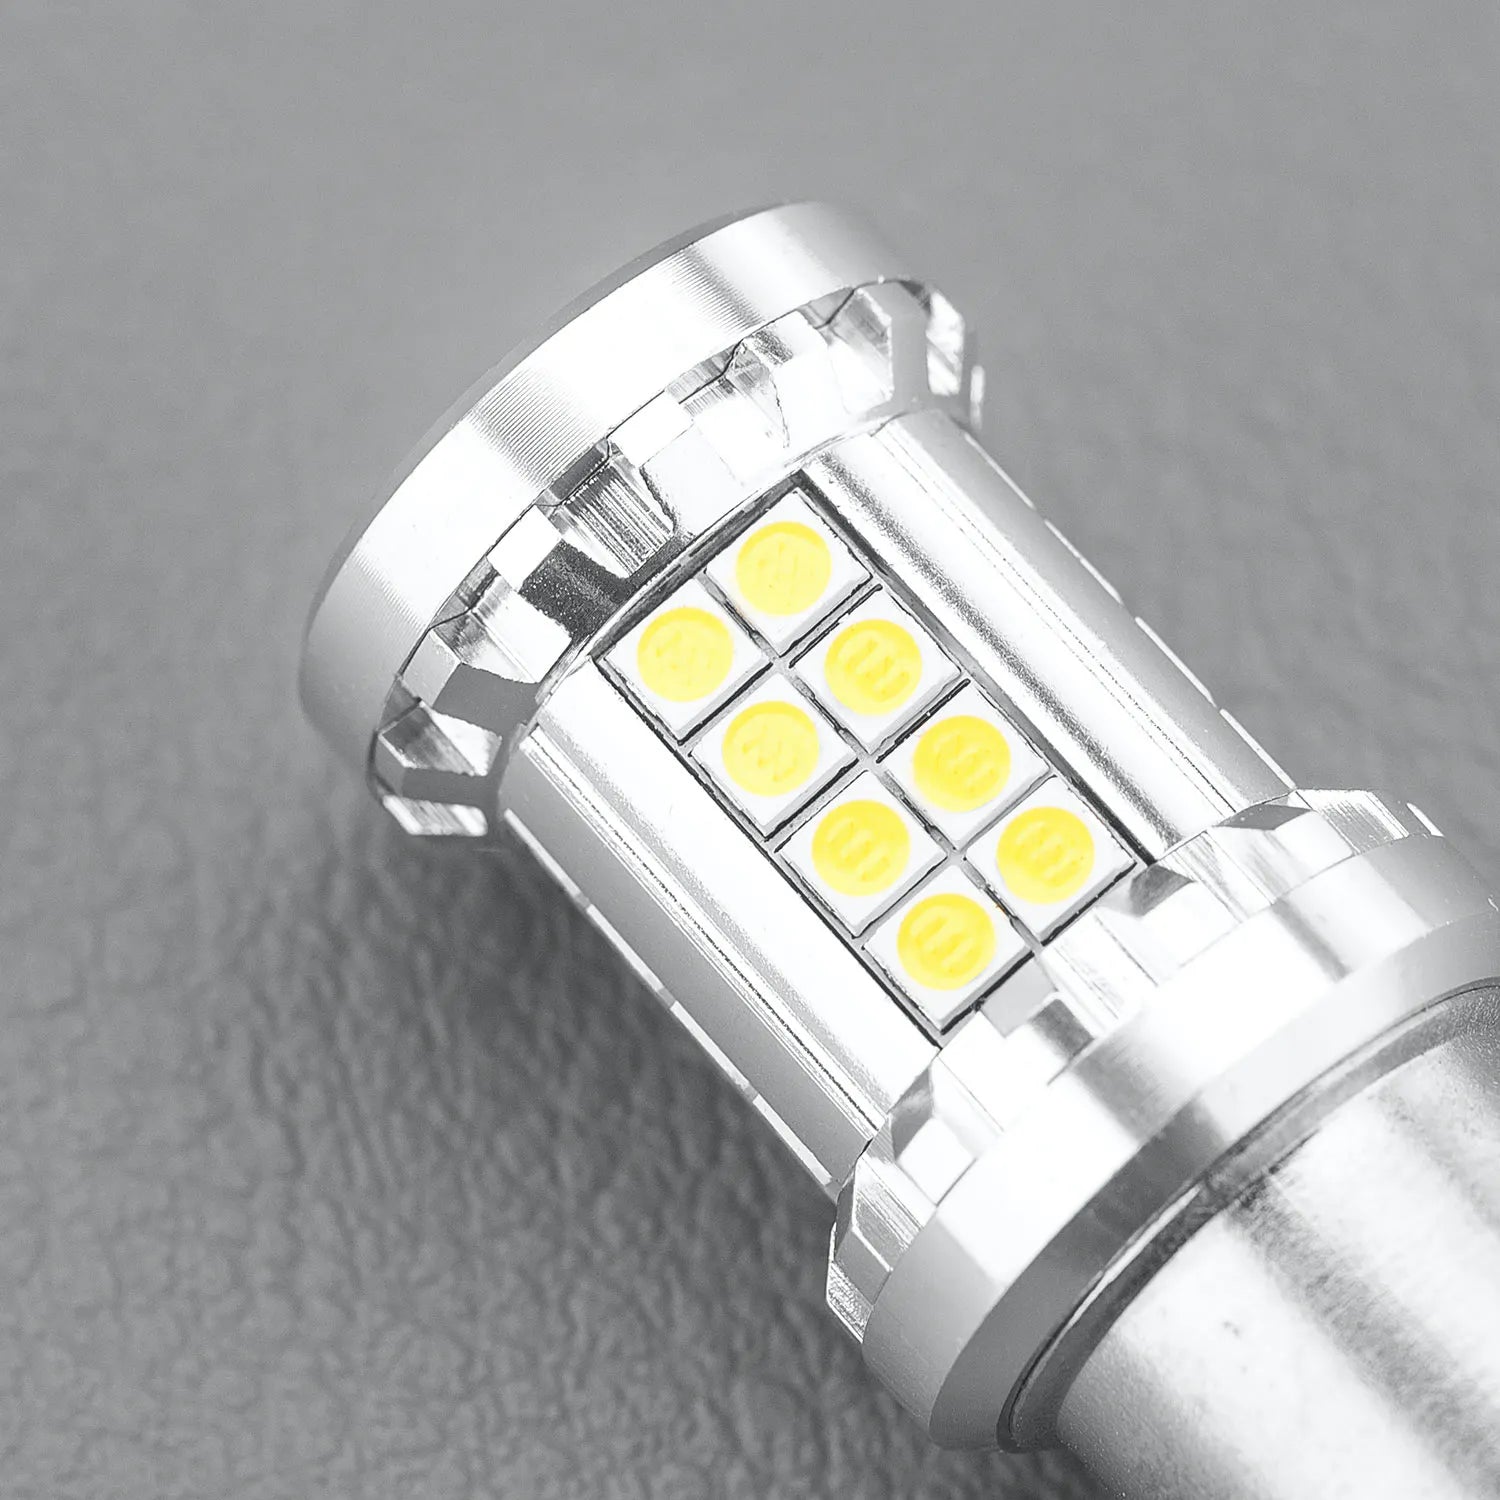 STEDI P21W-Sockel LED Lampe